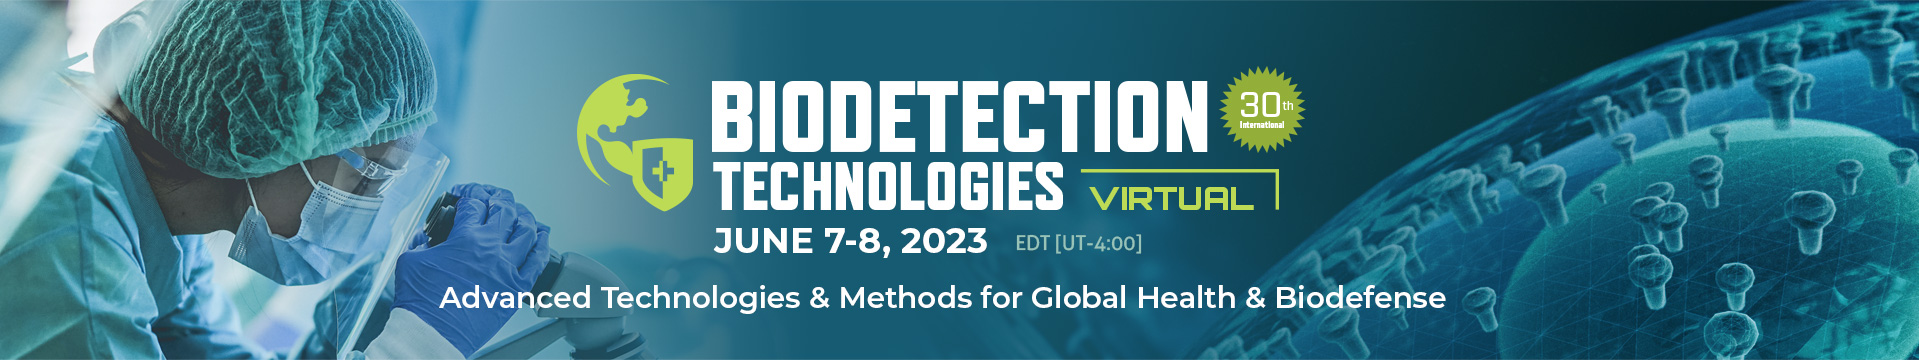 Biodetection Technologies, Online Event